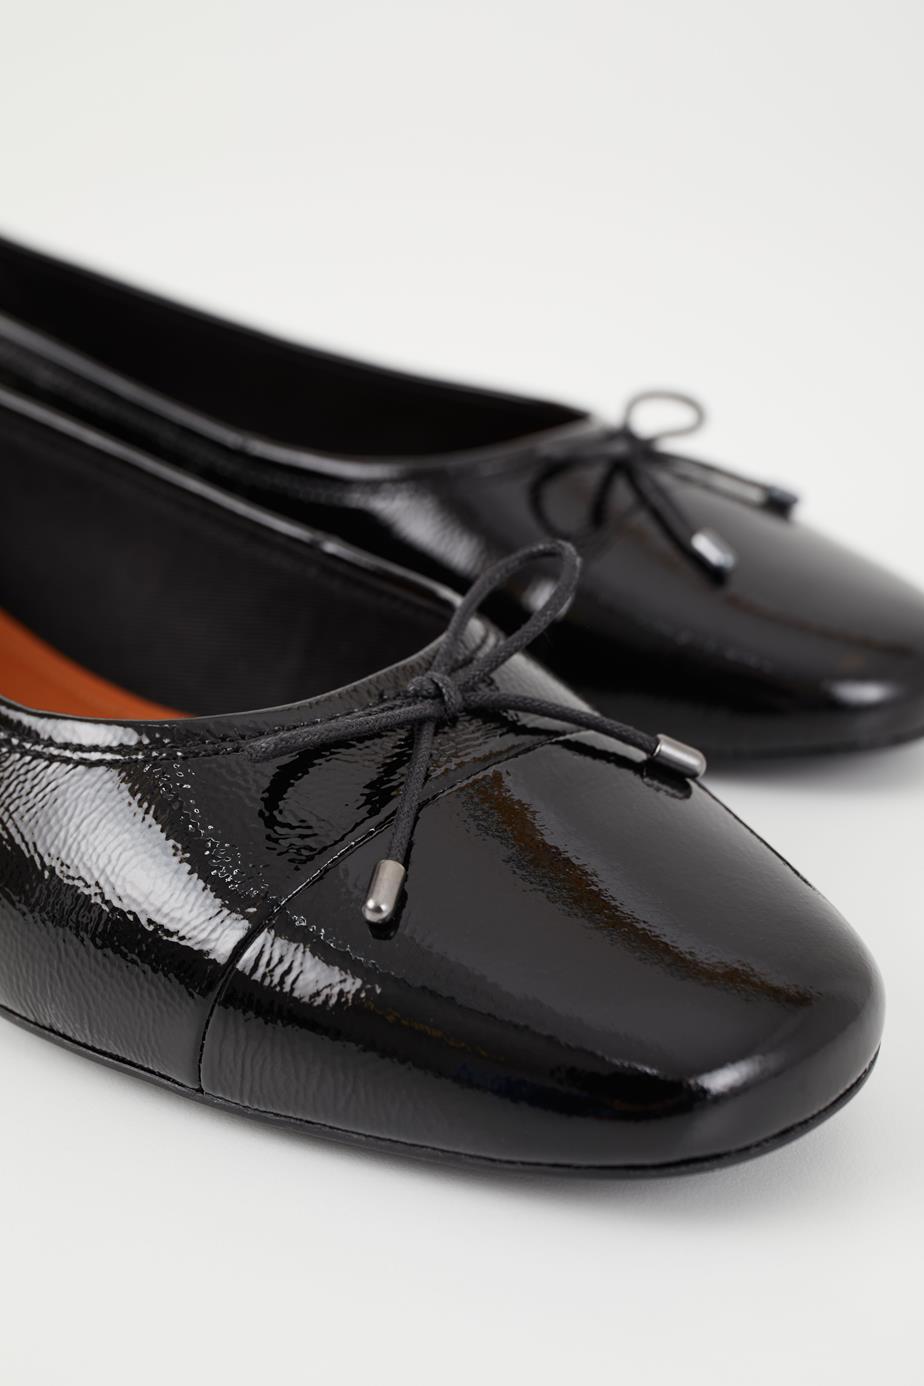 Jolin shoes Black patent leather